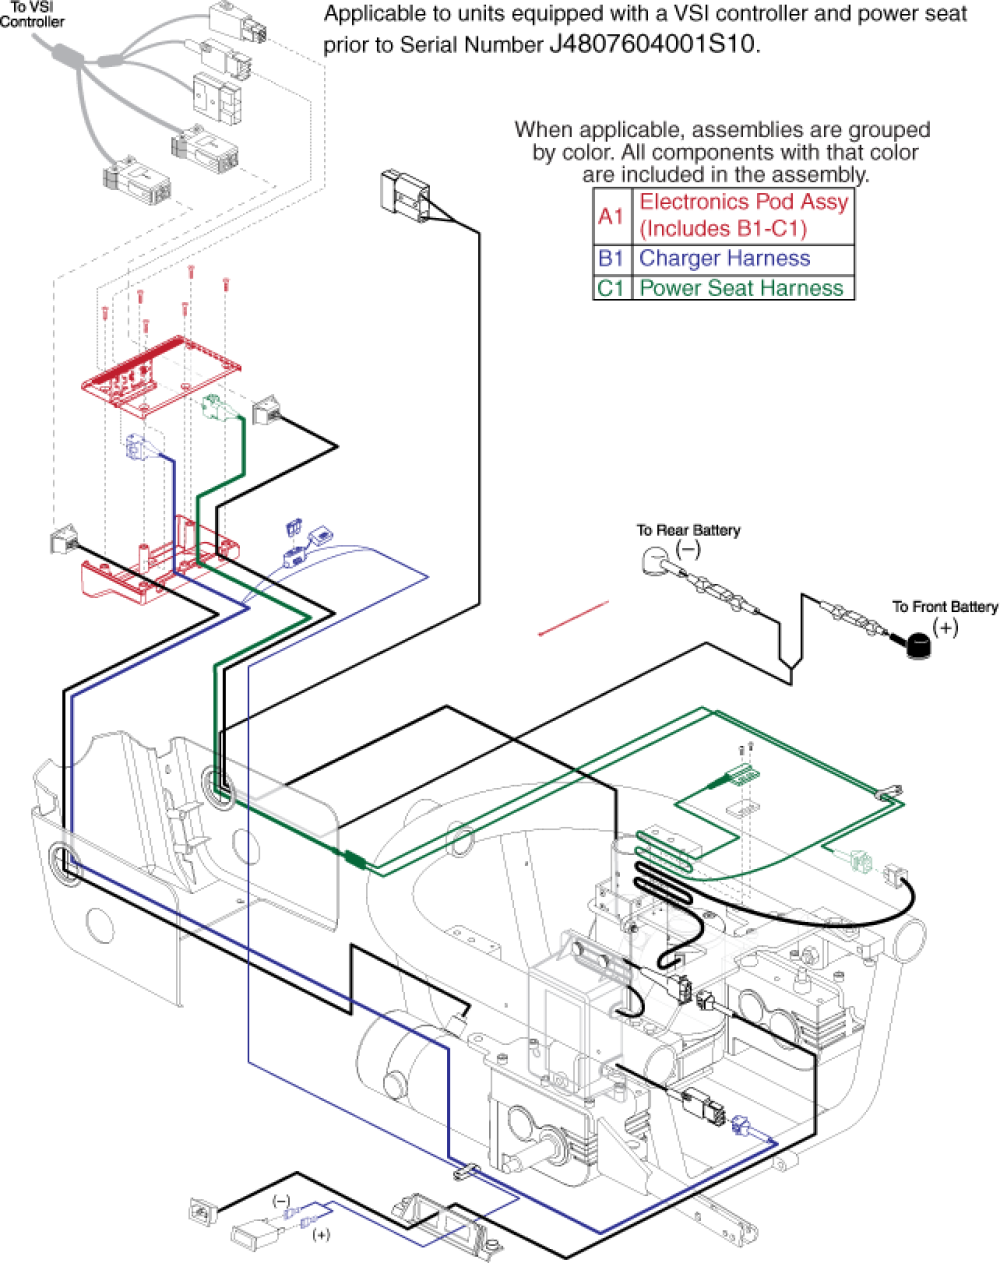 Electronics Tray Assembly - Vsi, Power Seat parts diagram